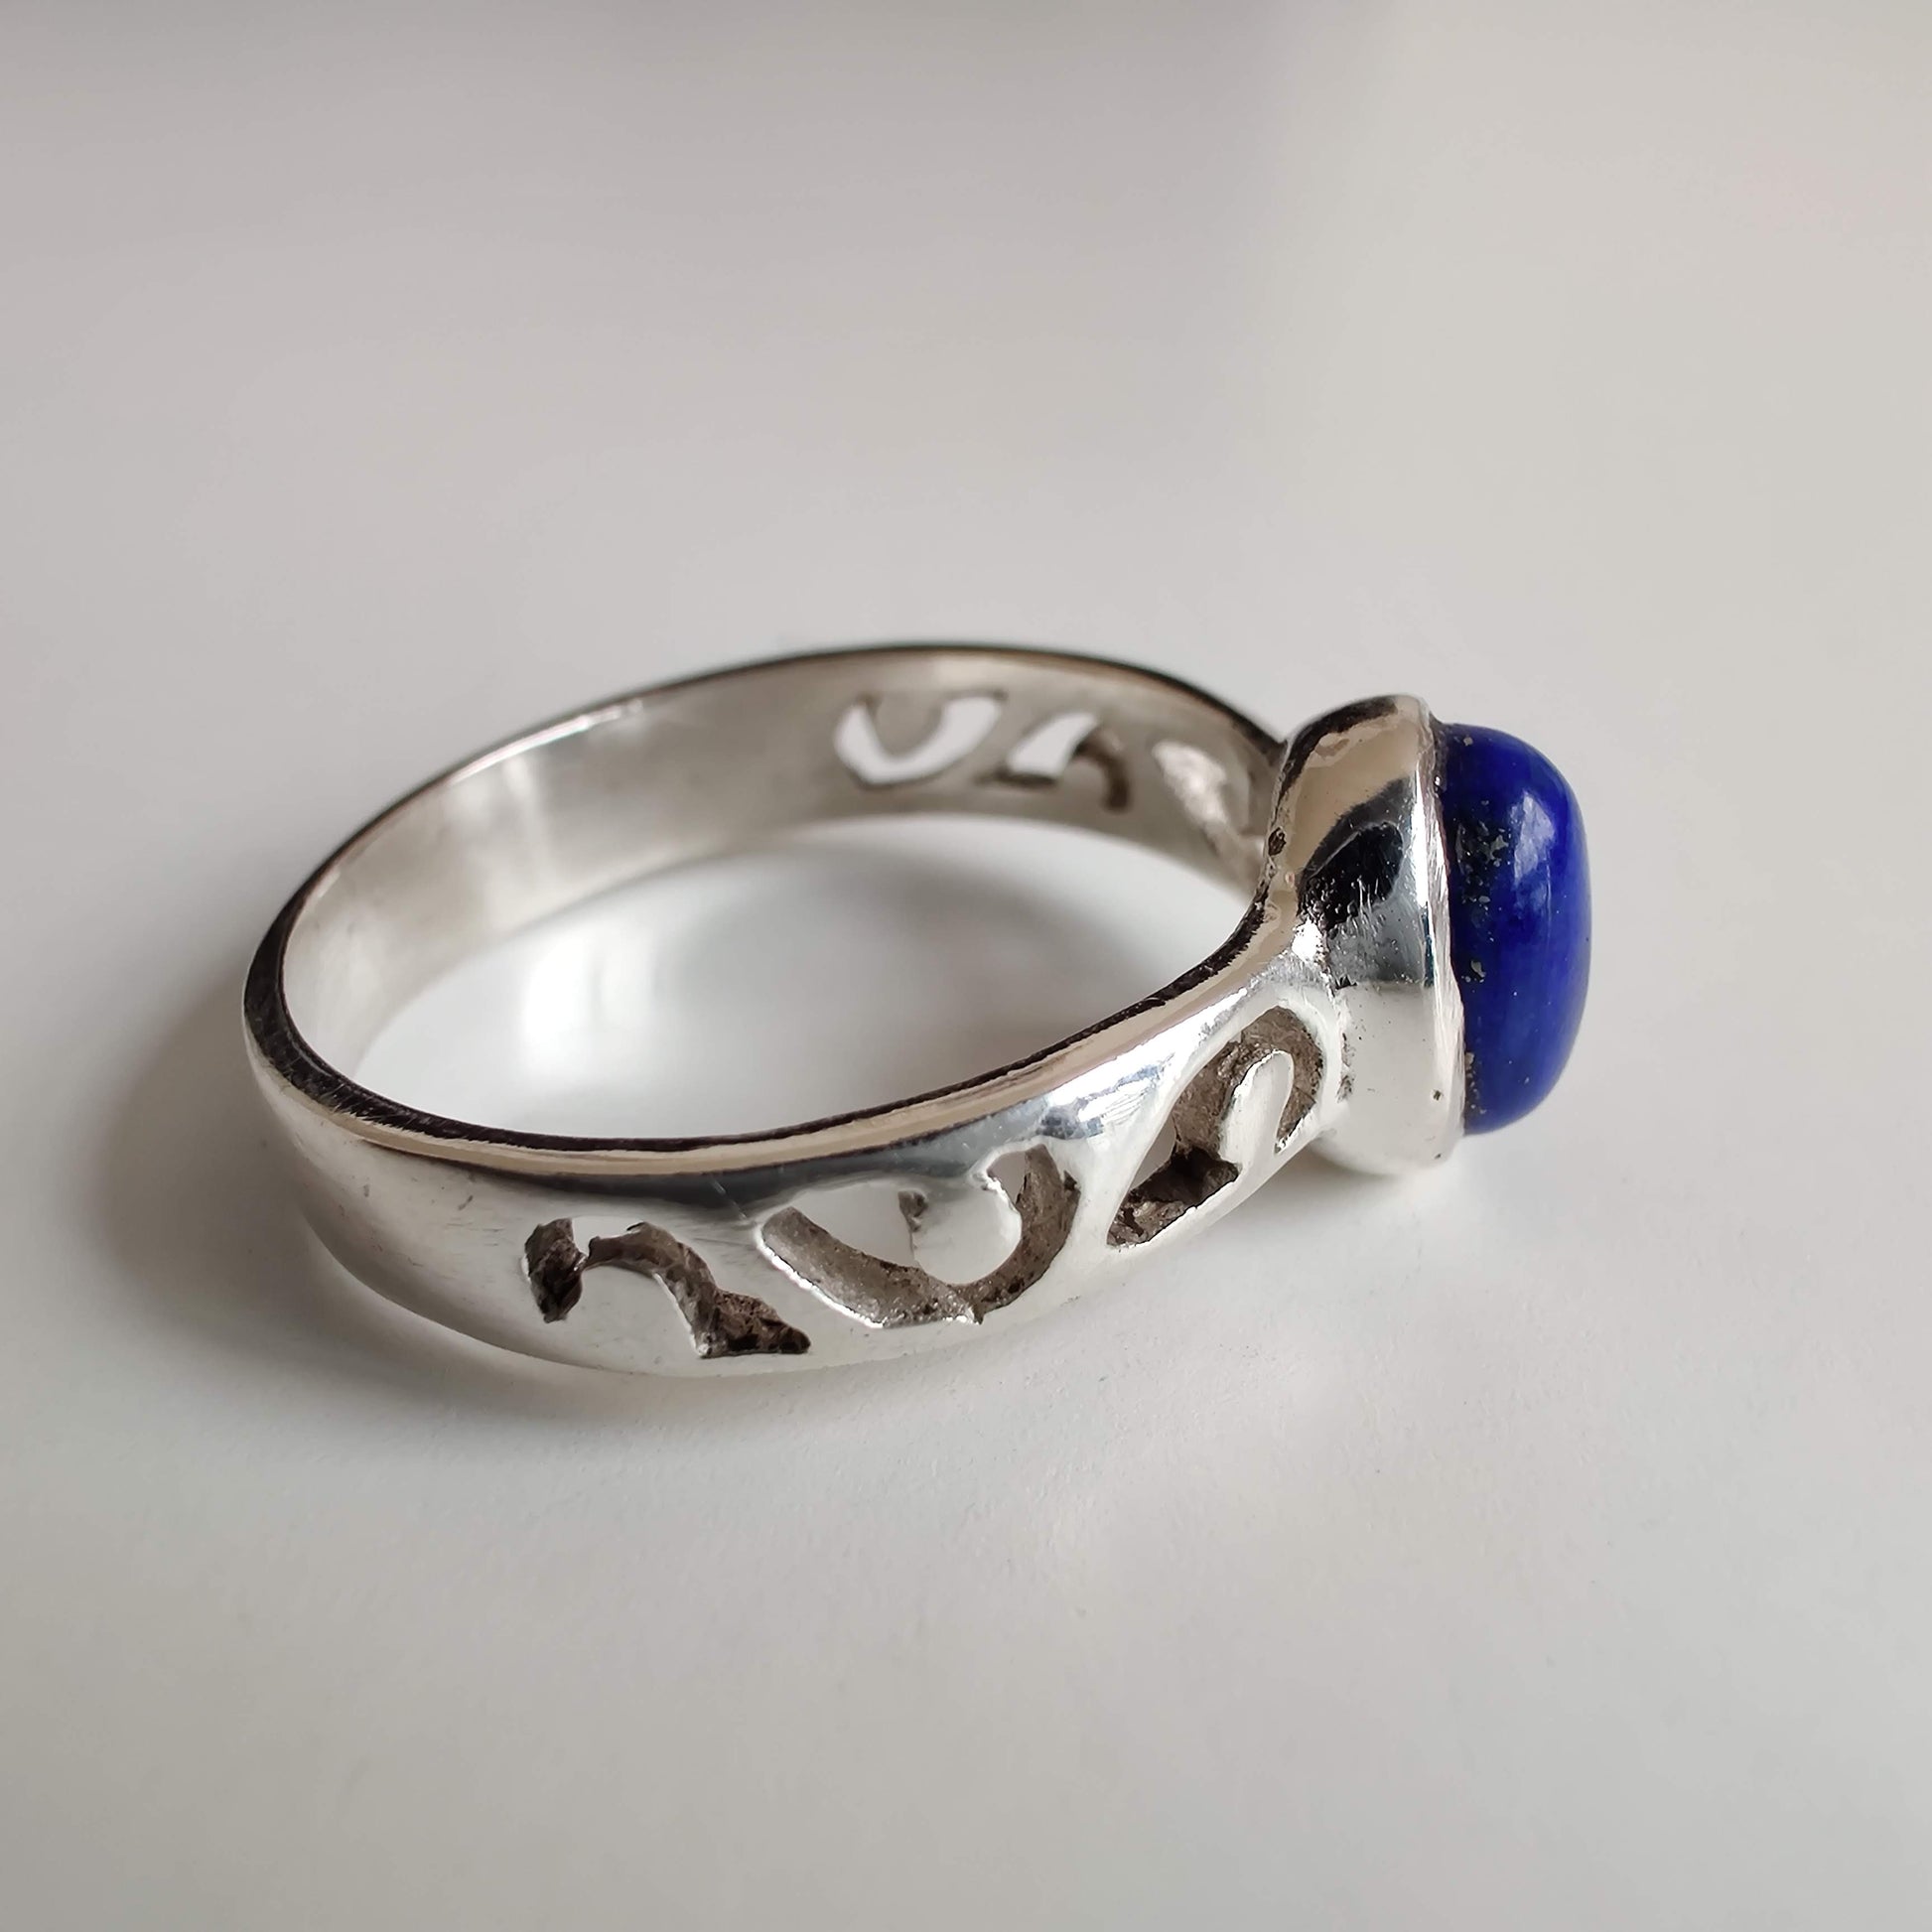 Lapis Lazuli Oval 925 Sterling Silver Ring with Koru Design - Rivendell Shop